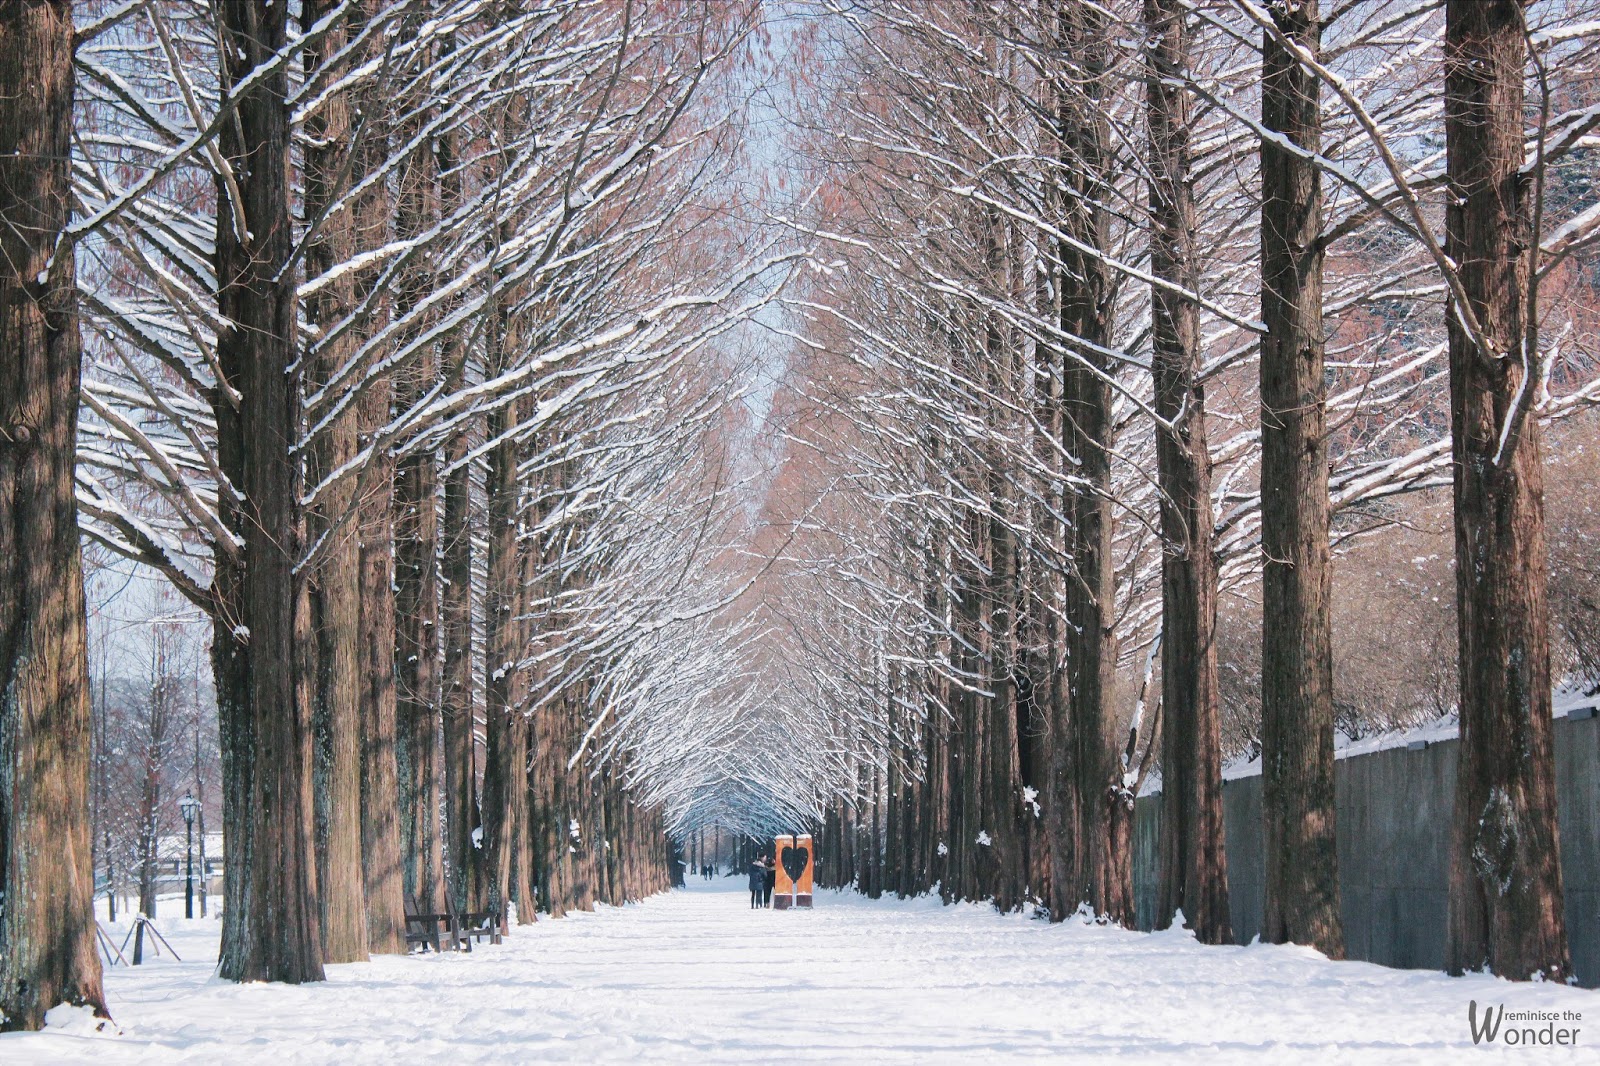 Winter Wonderland in Damyang - Metasequoia-lined Road (담양 메타세쿼이아길) -  Reminisce the Wonder